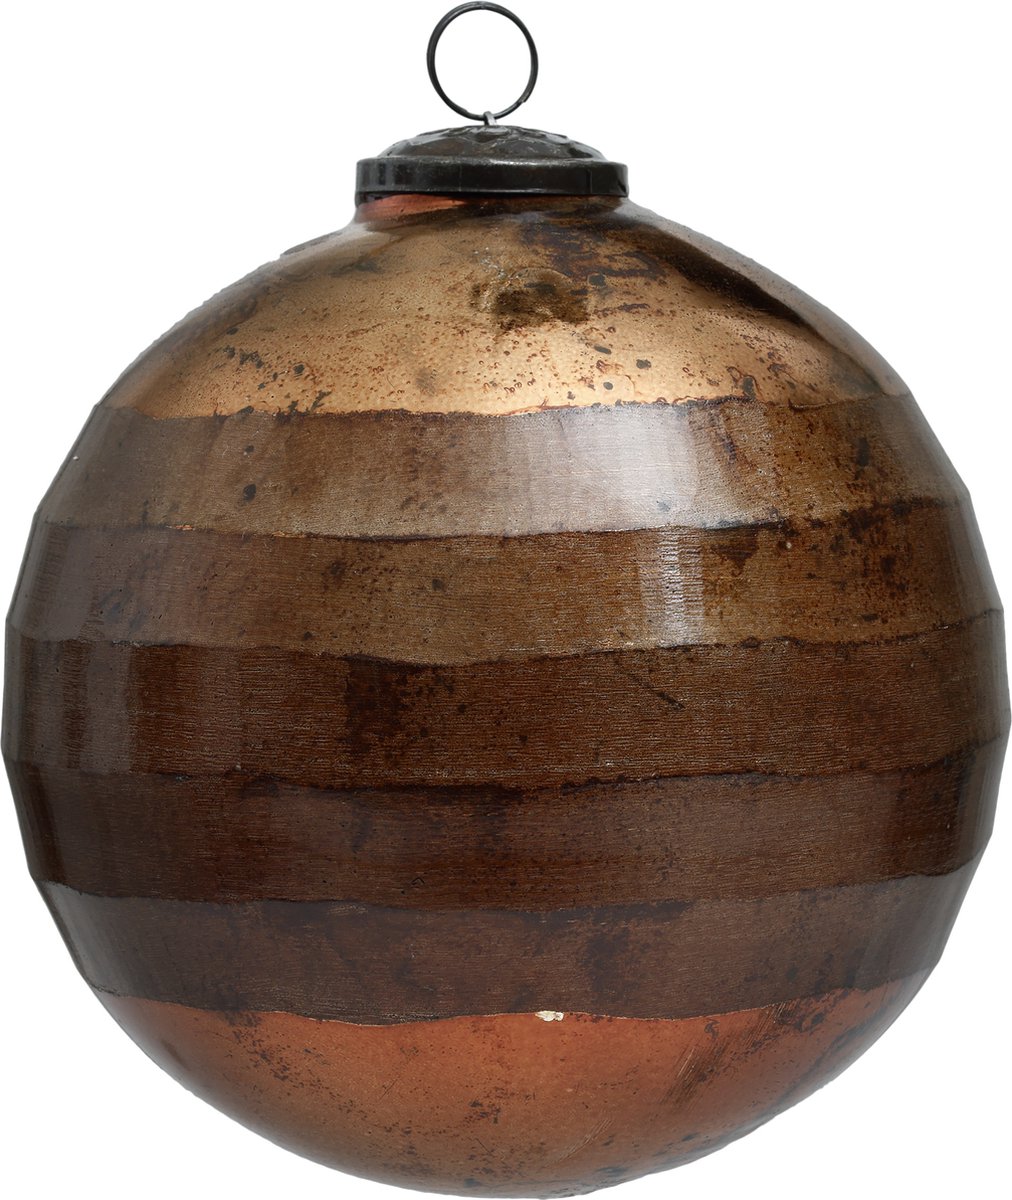 PTMD Kerstbal glas oxide bruin mat en glanzend XL - 15 cm rond - PTMD Xmas Arwen oxidised brown glass ball